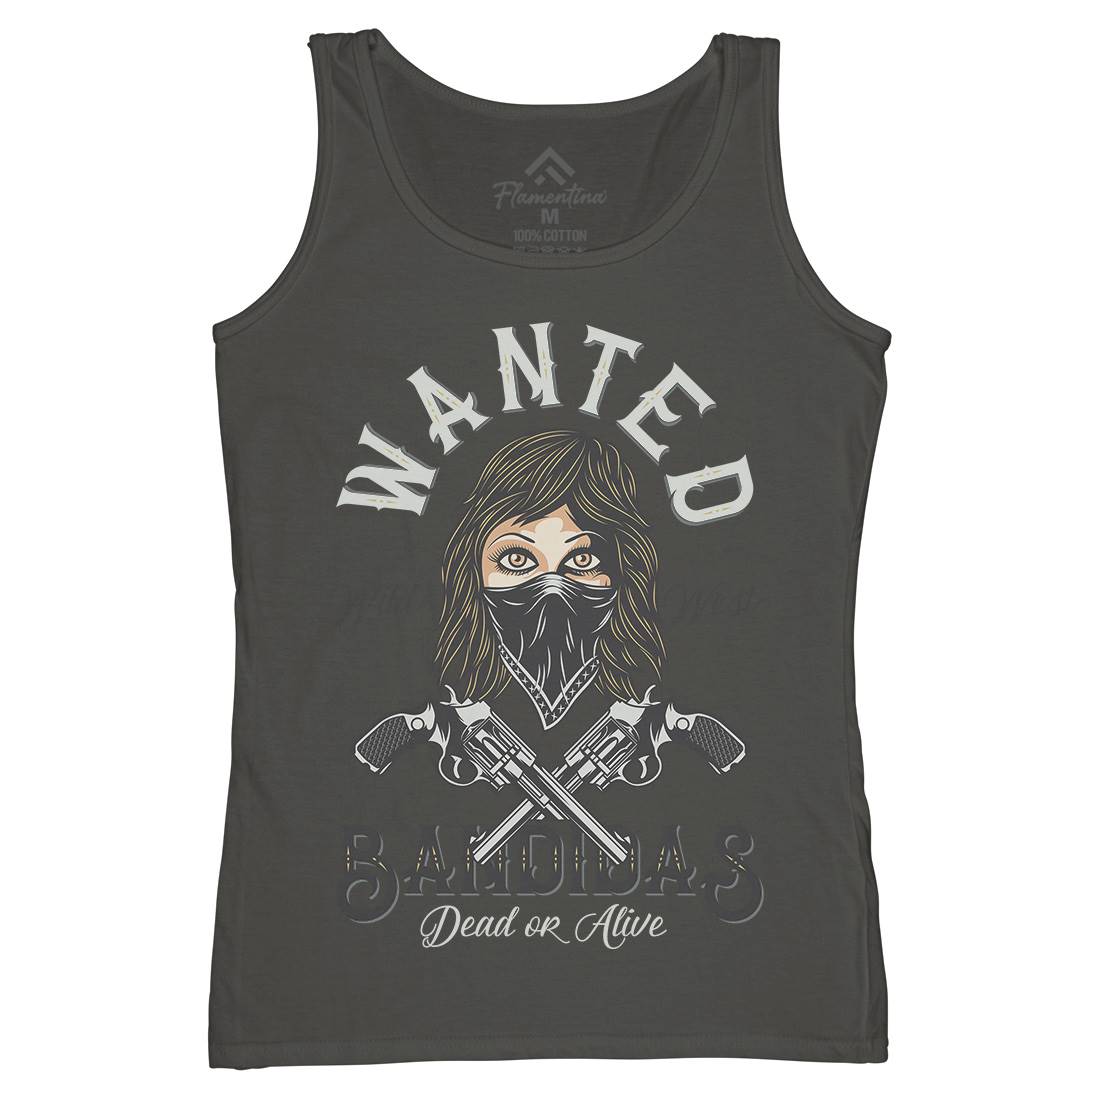 Wanted Bandidas Womens Organic Tank Top Vest Retro D995